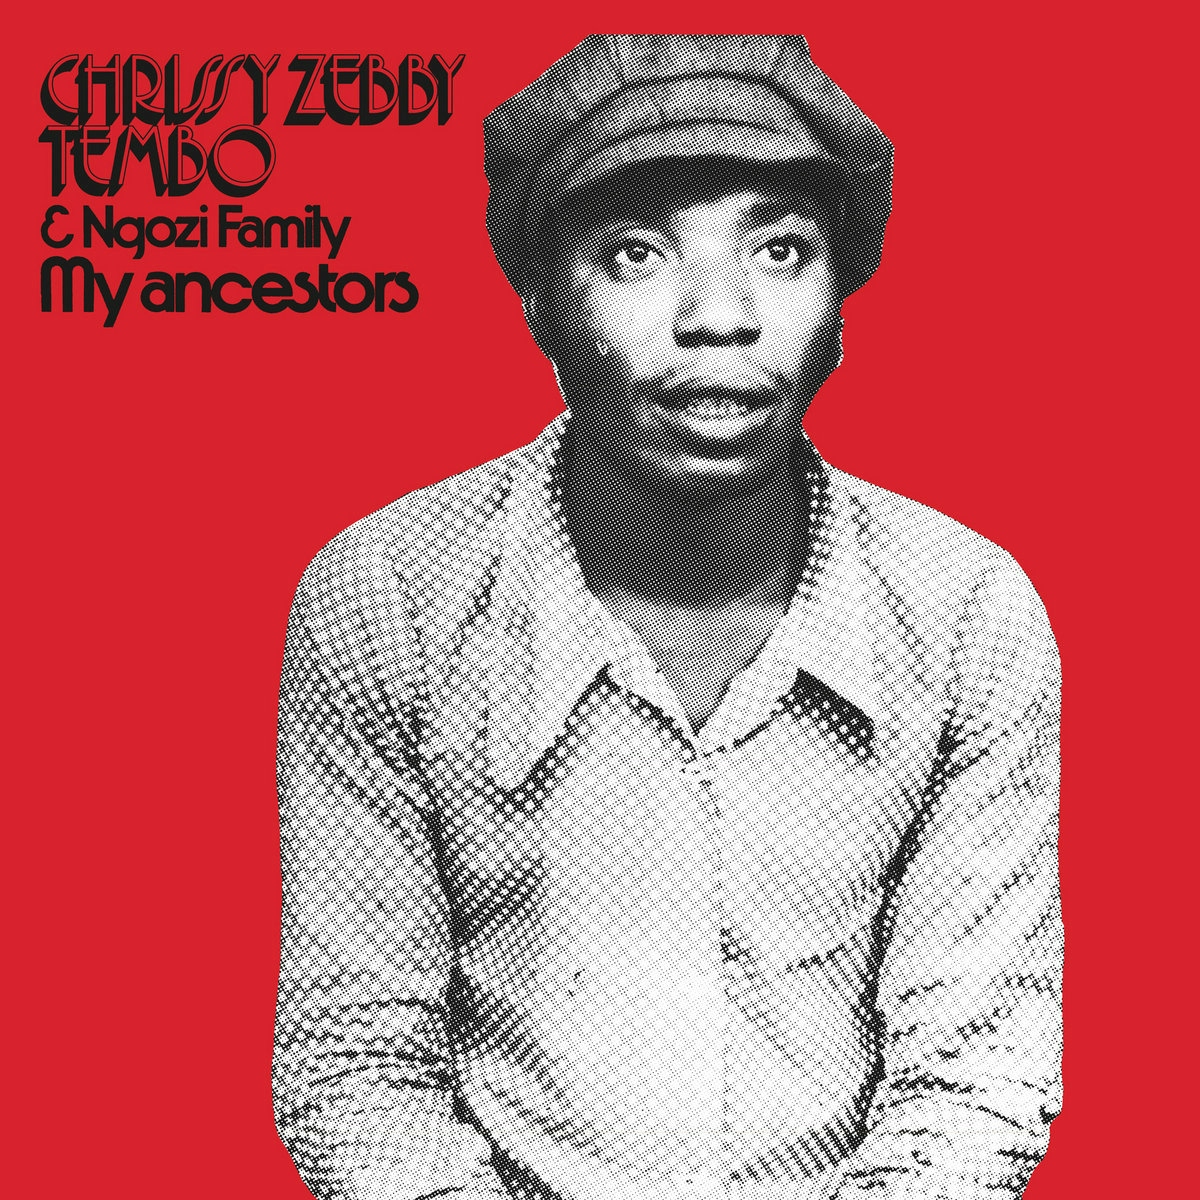 Album artwork for My Ancestors by Chrissy Zebby Tembo and Ngozi Family